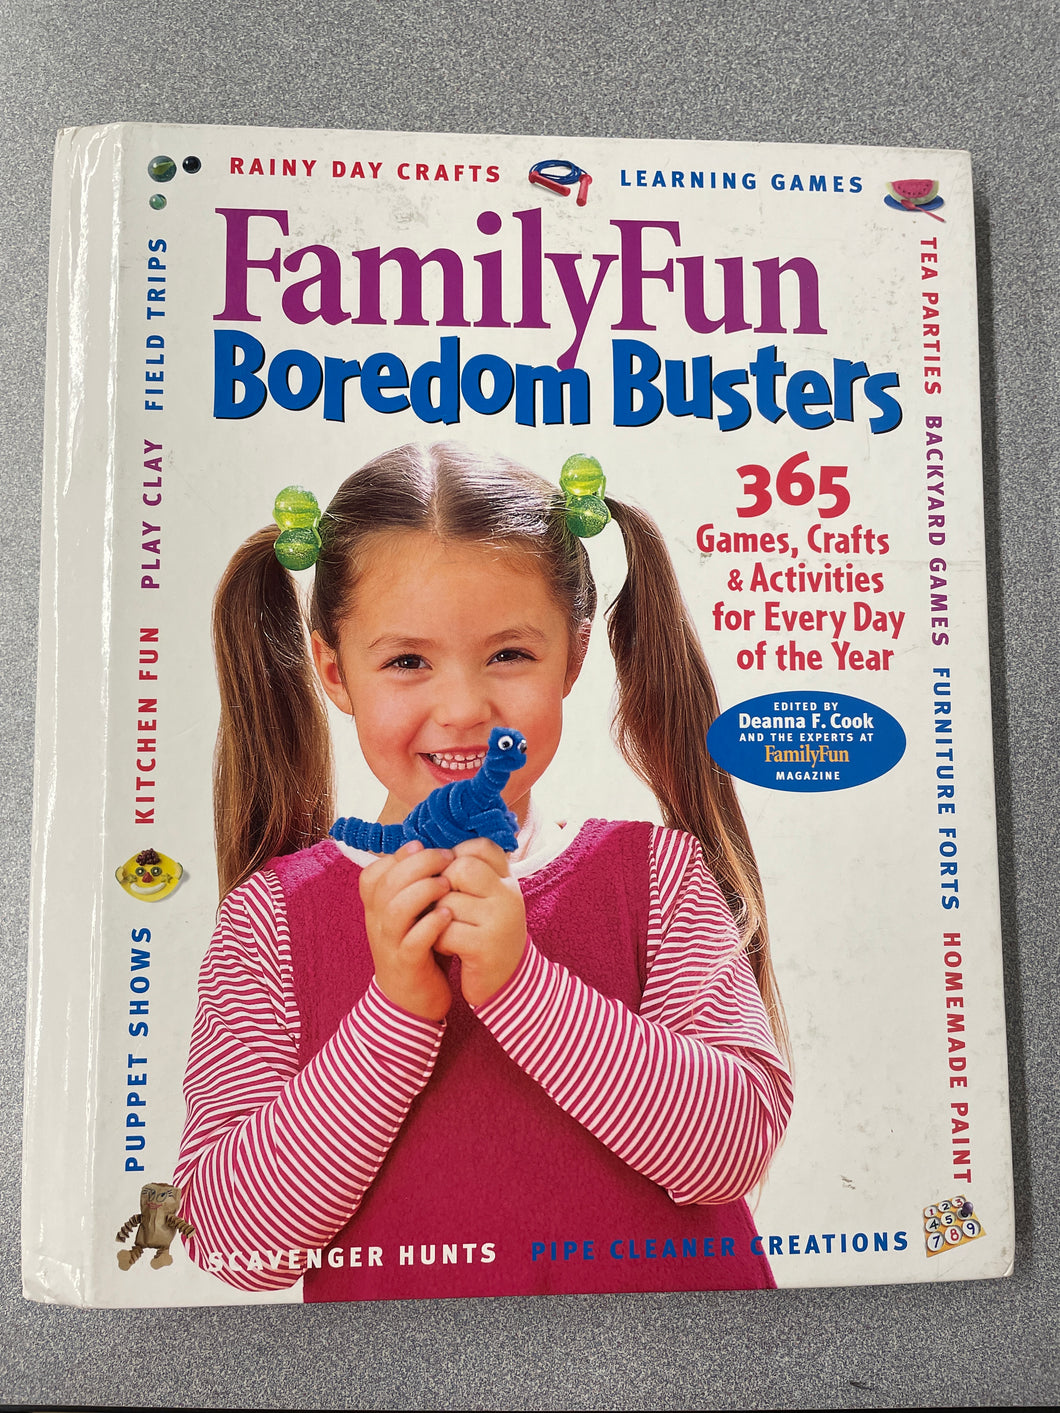 FamilyFun Boredom Busters, Cook, Deanna F., ed. [2002] CN 2/24